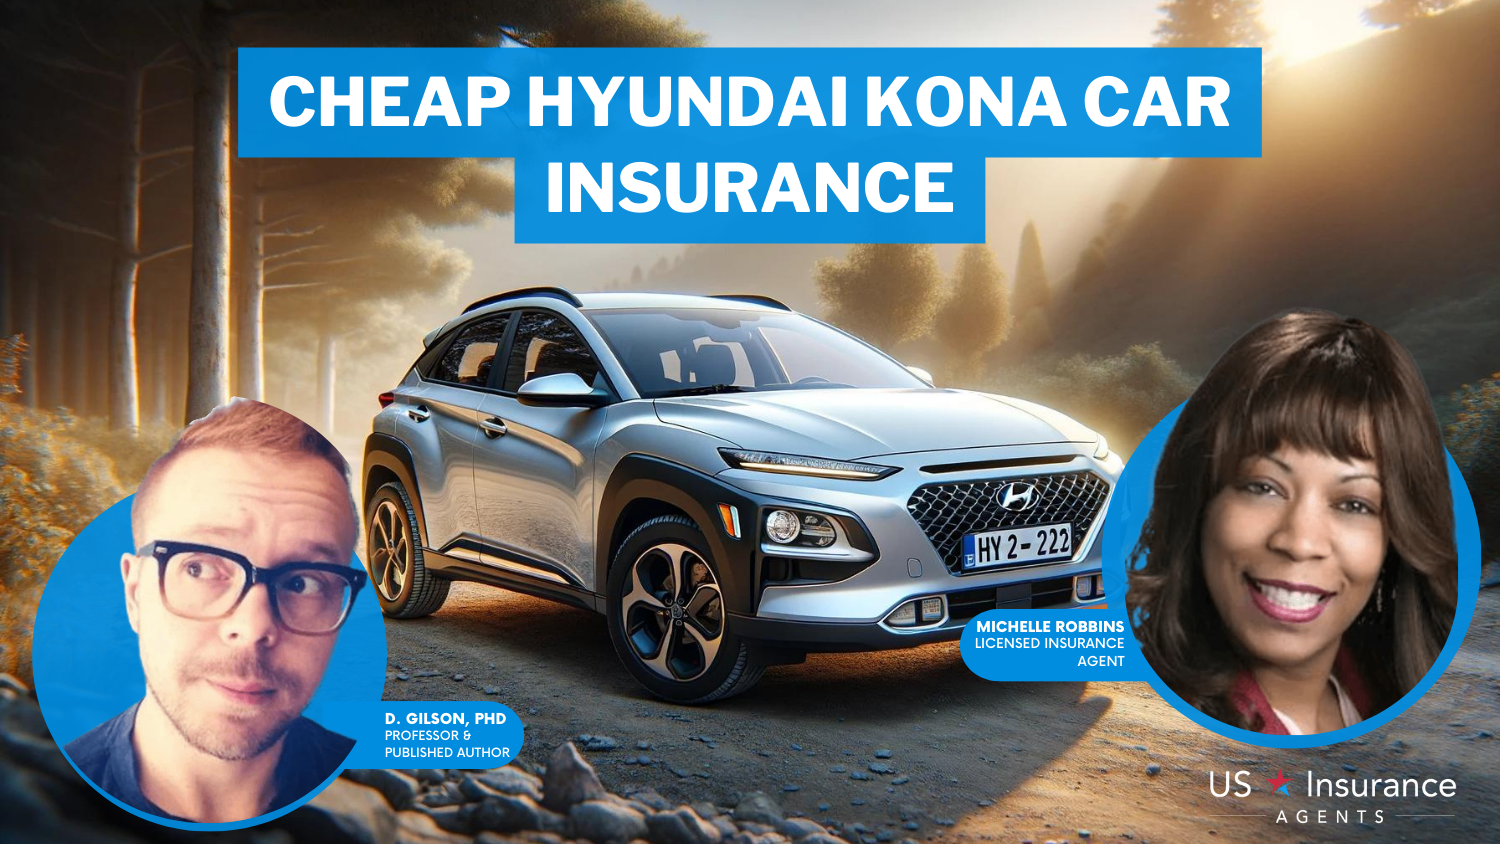 Cheap Hyundai Kona Car Insurance: Allstate, Nationwide, and American Family